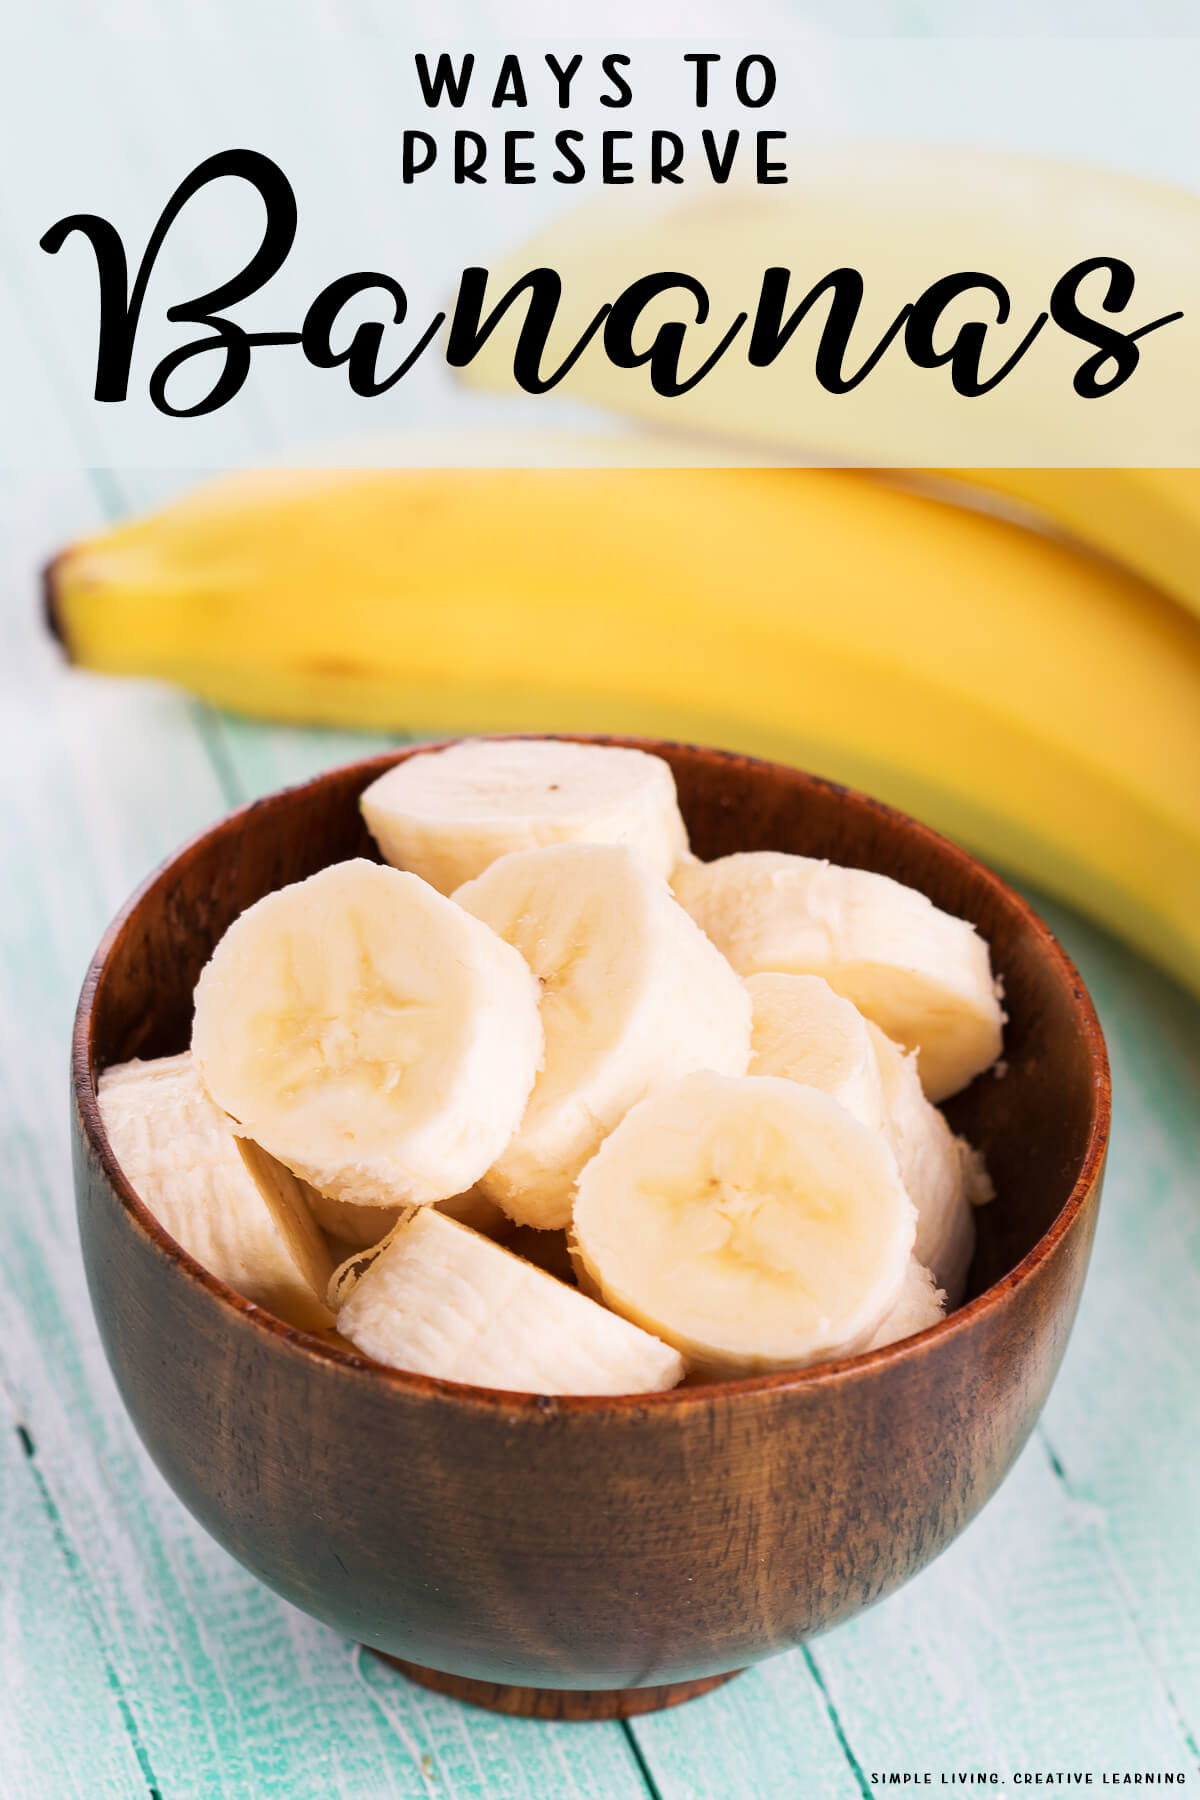 Ways to Preserve Bananas